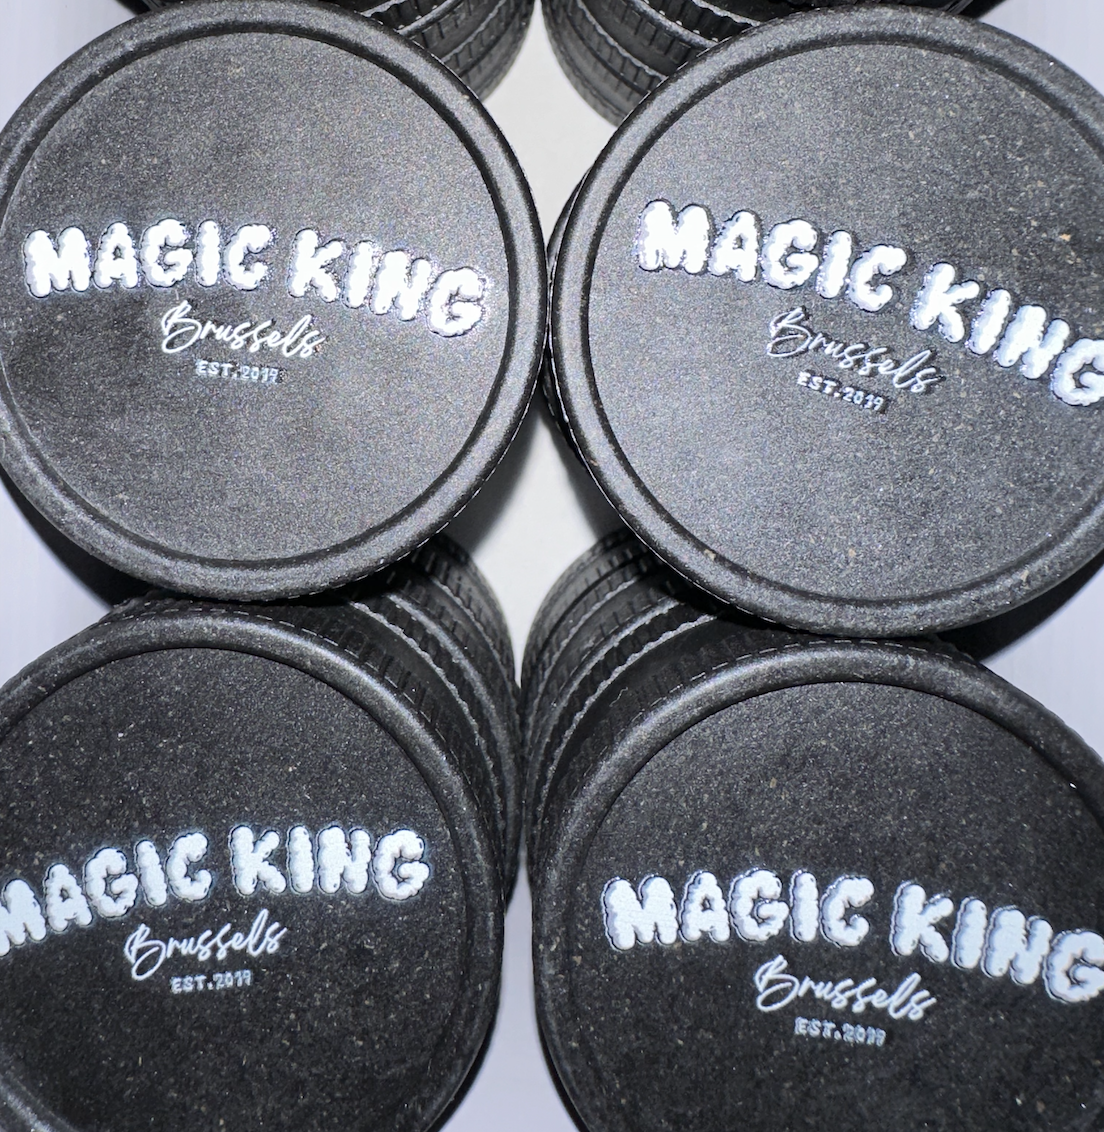 Magic King Black Hemp Grinder - Since 2019